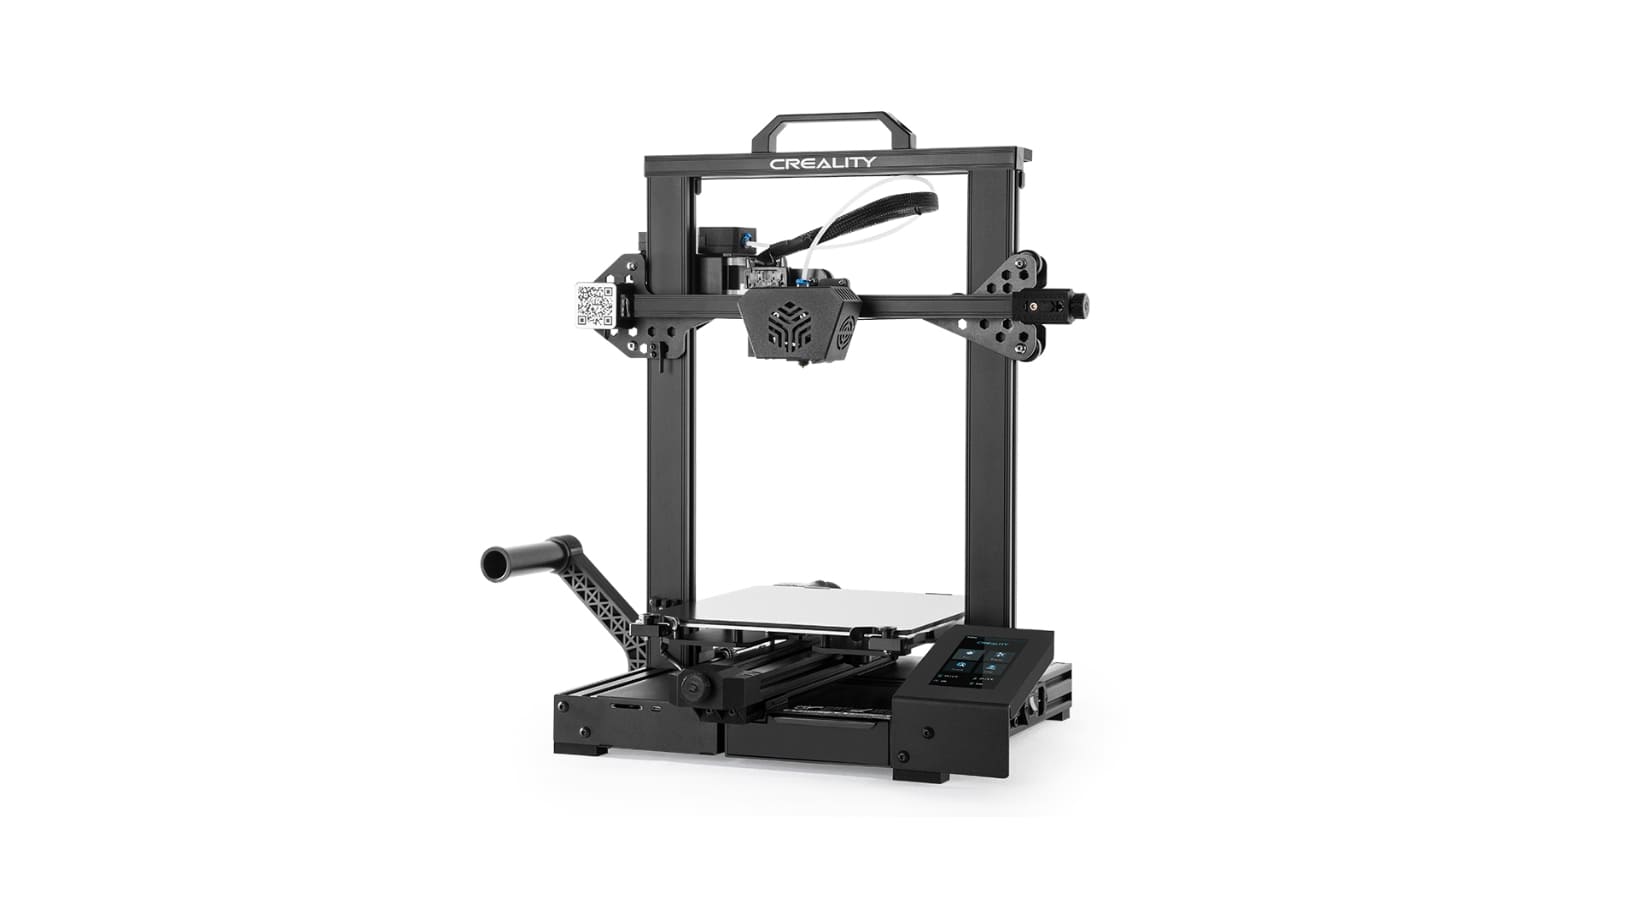 Creality CR-6 SE 3D Printer - Latest News and Information